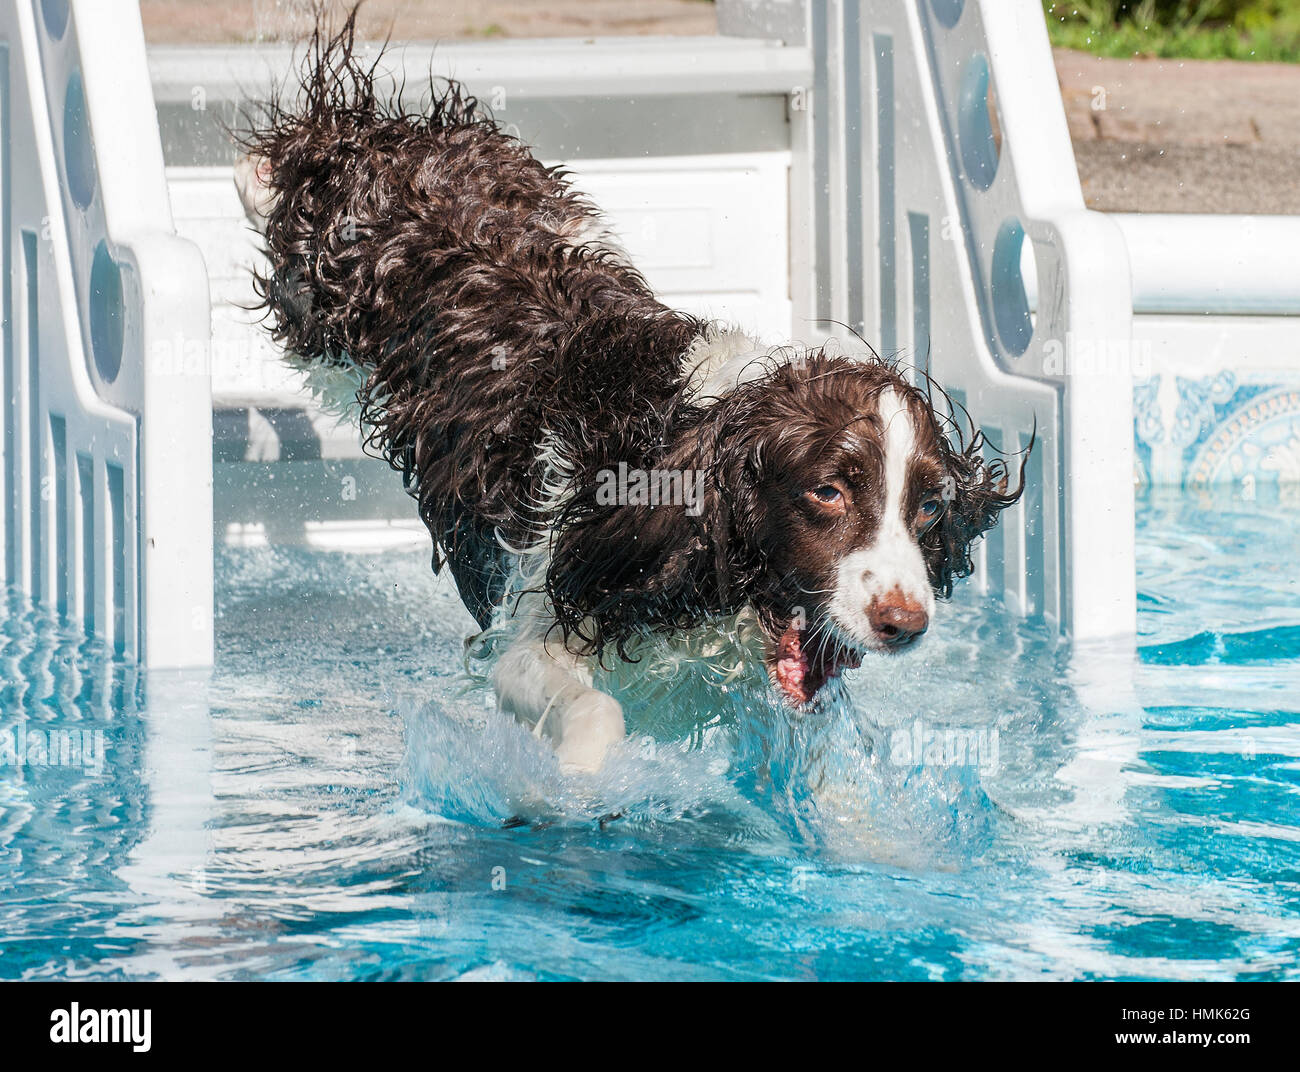 Marrone e bianco springer spaniel cane salto in piscina dalla Scala per piscina Foto Stock